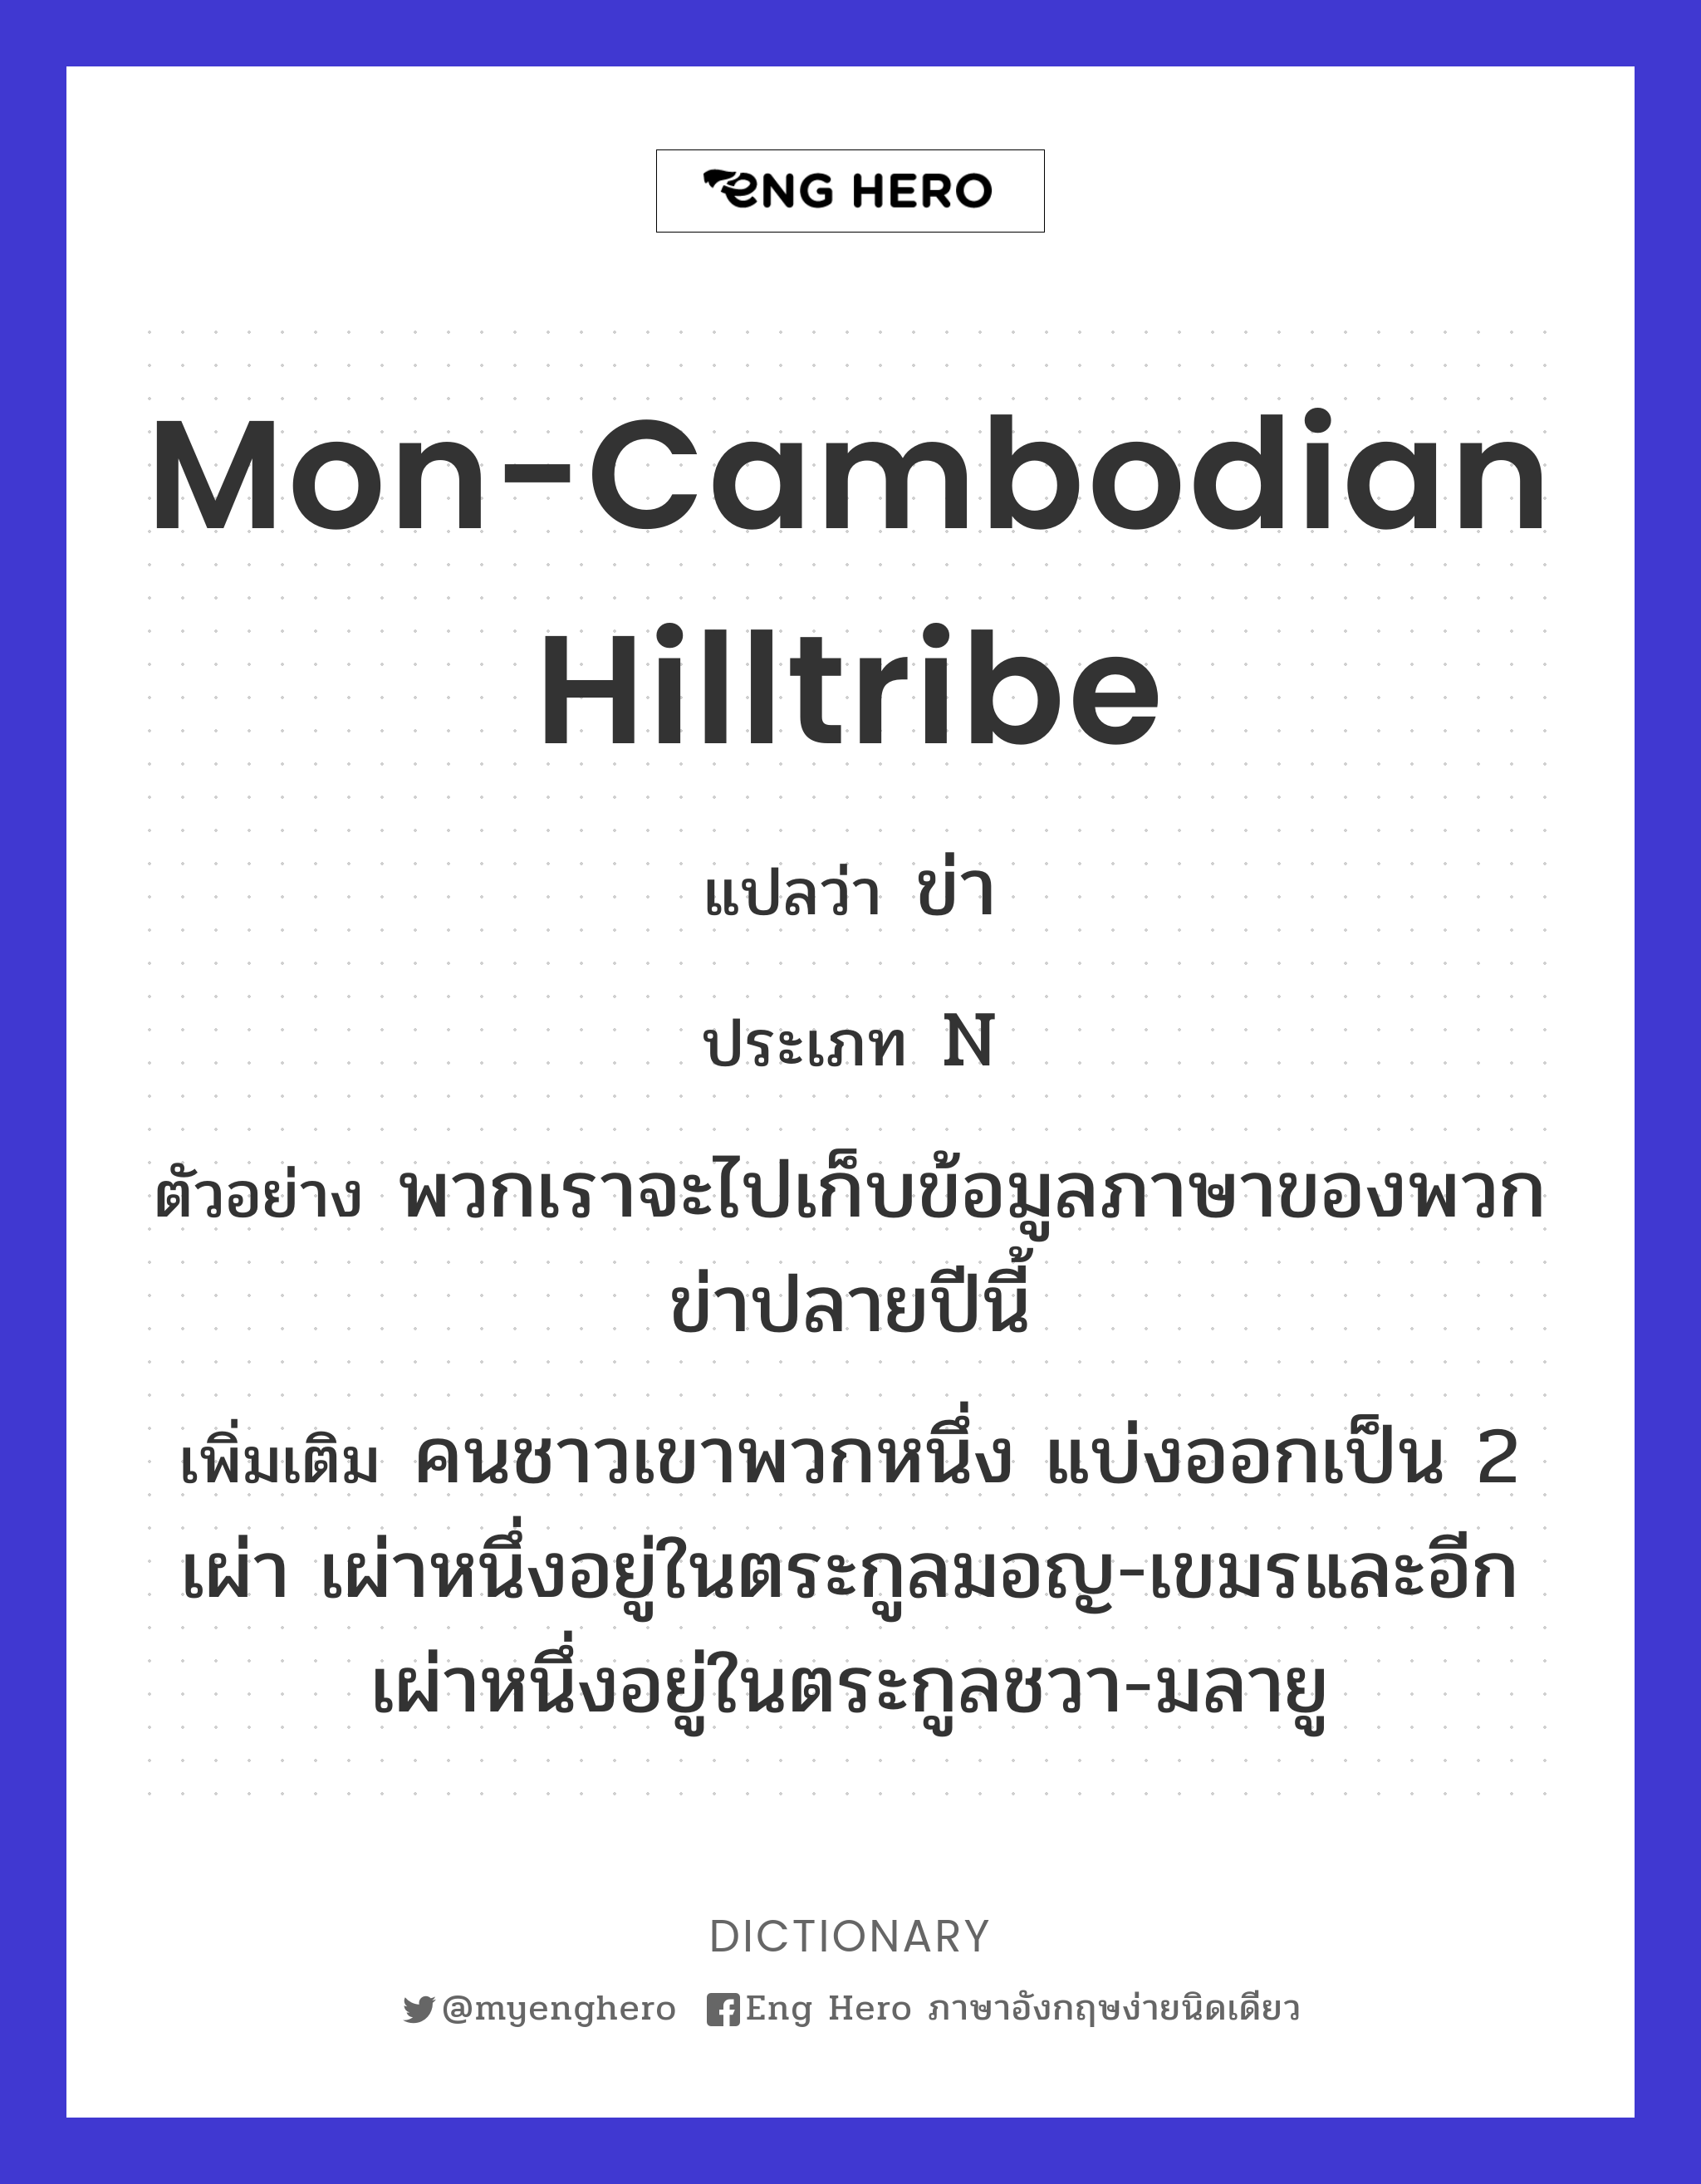 Mon-Cambodian hilltribe